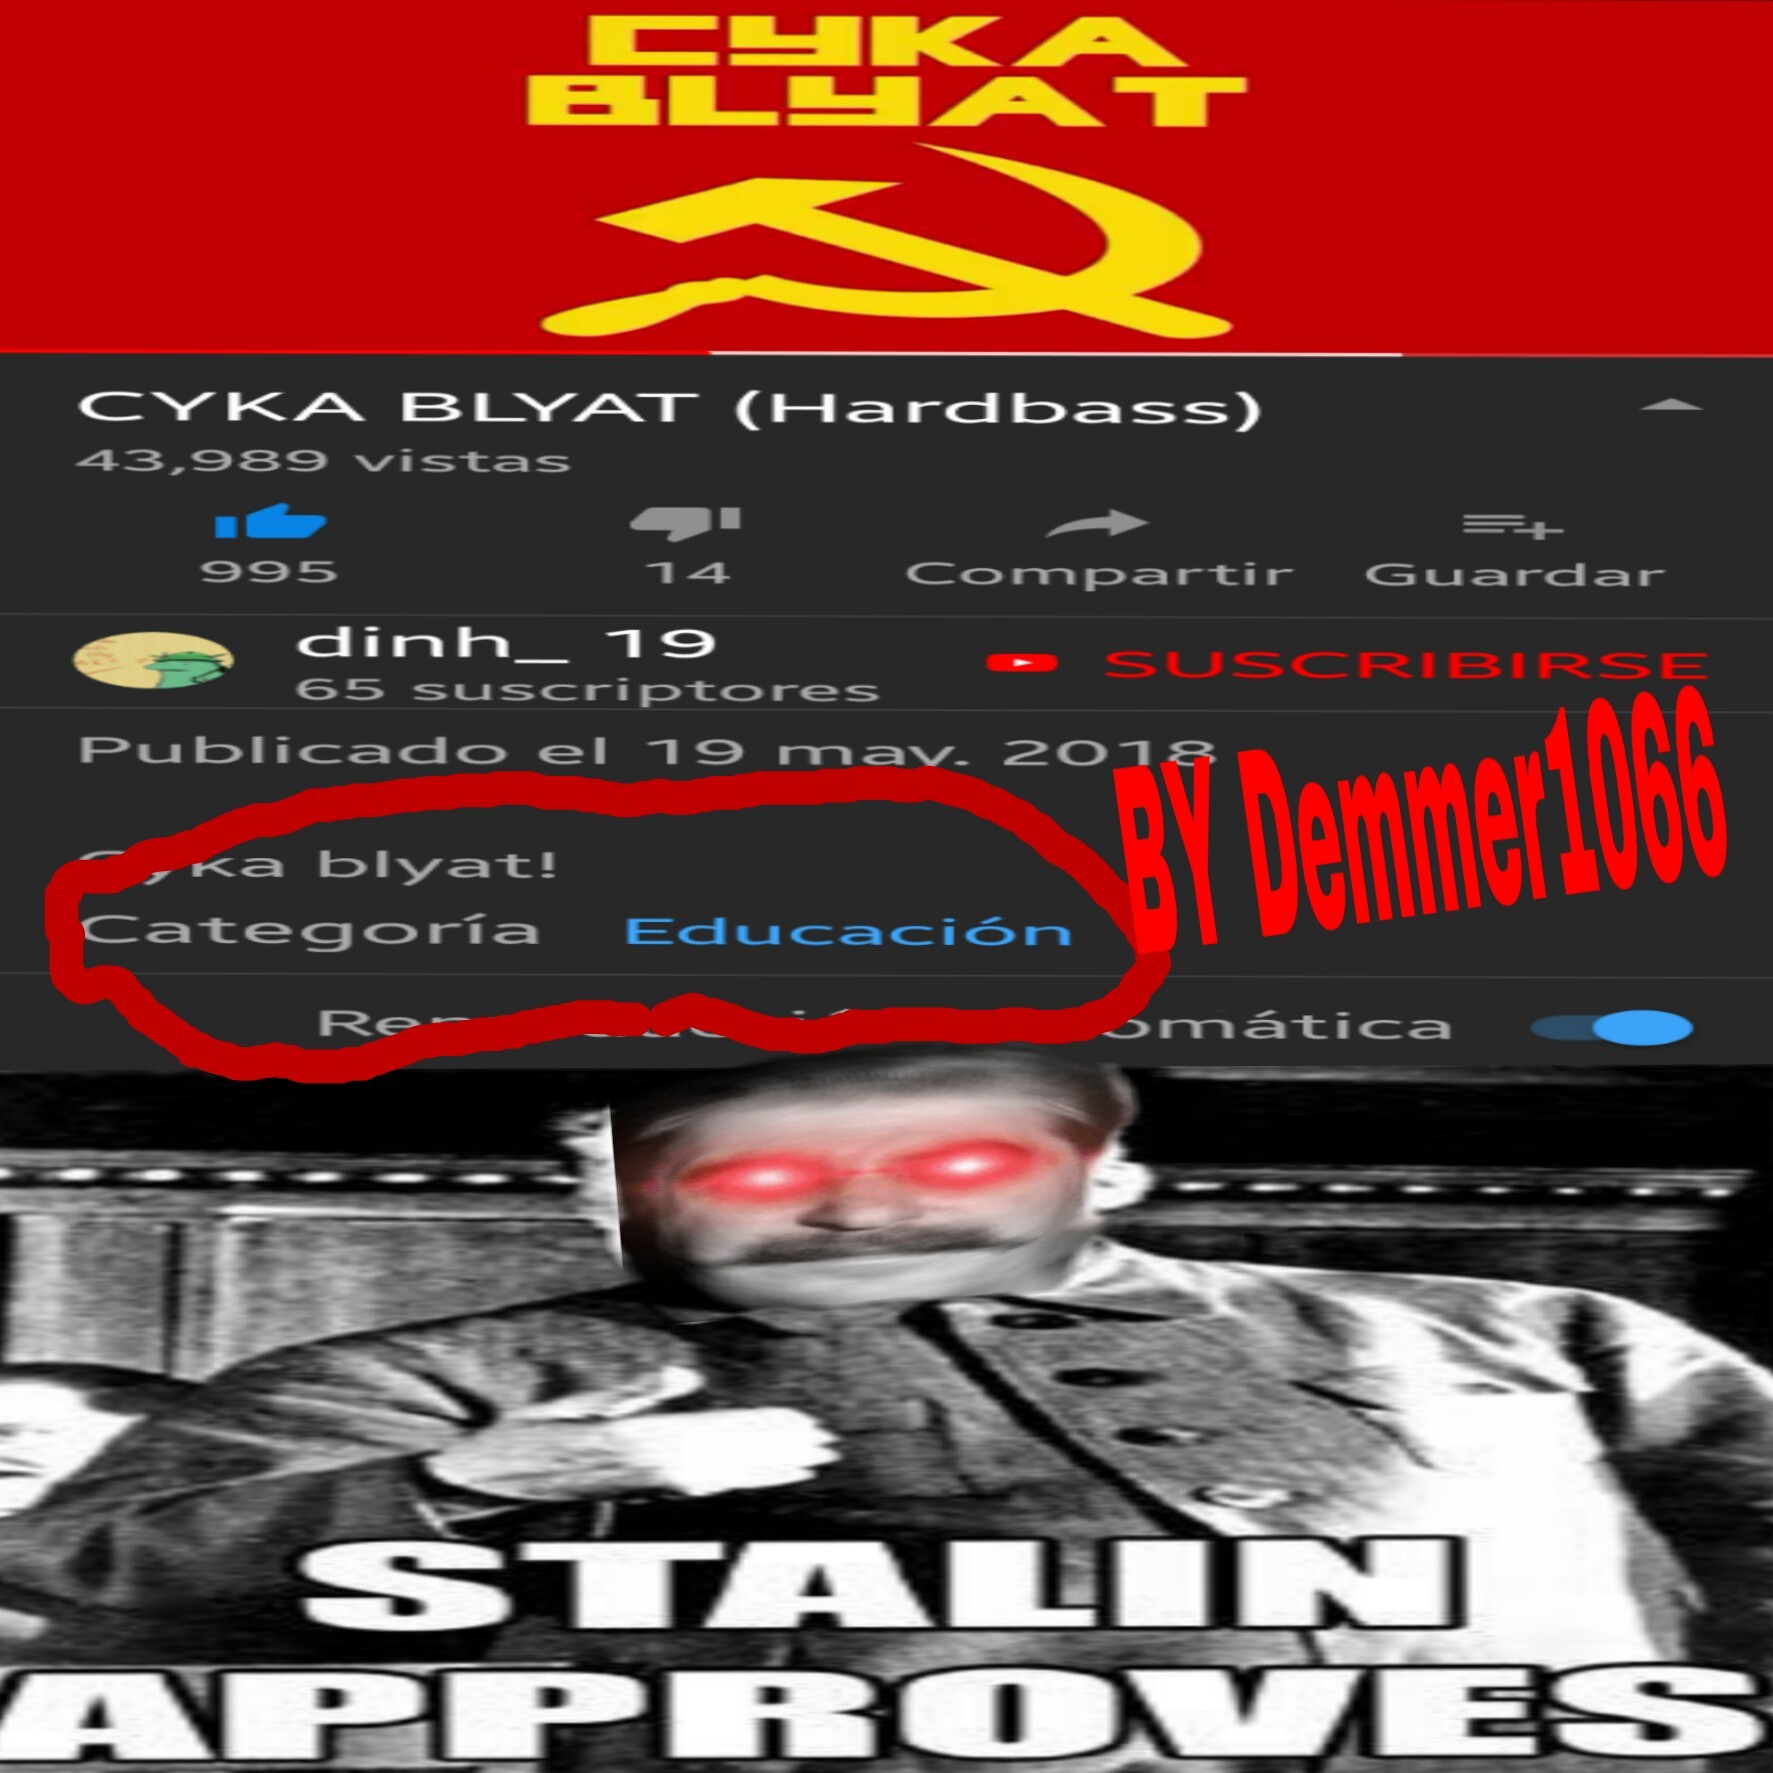 Stalin approved - meme